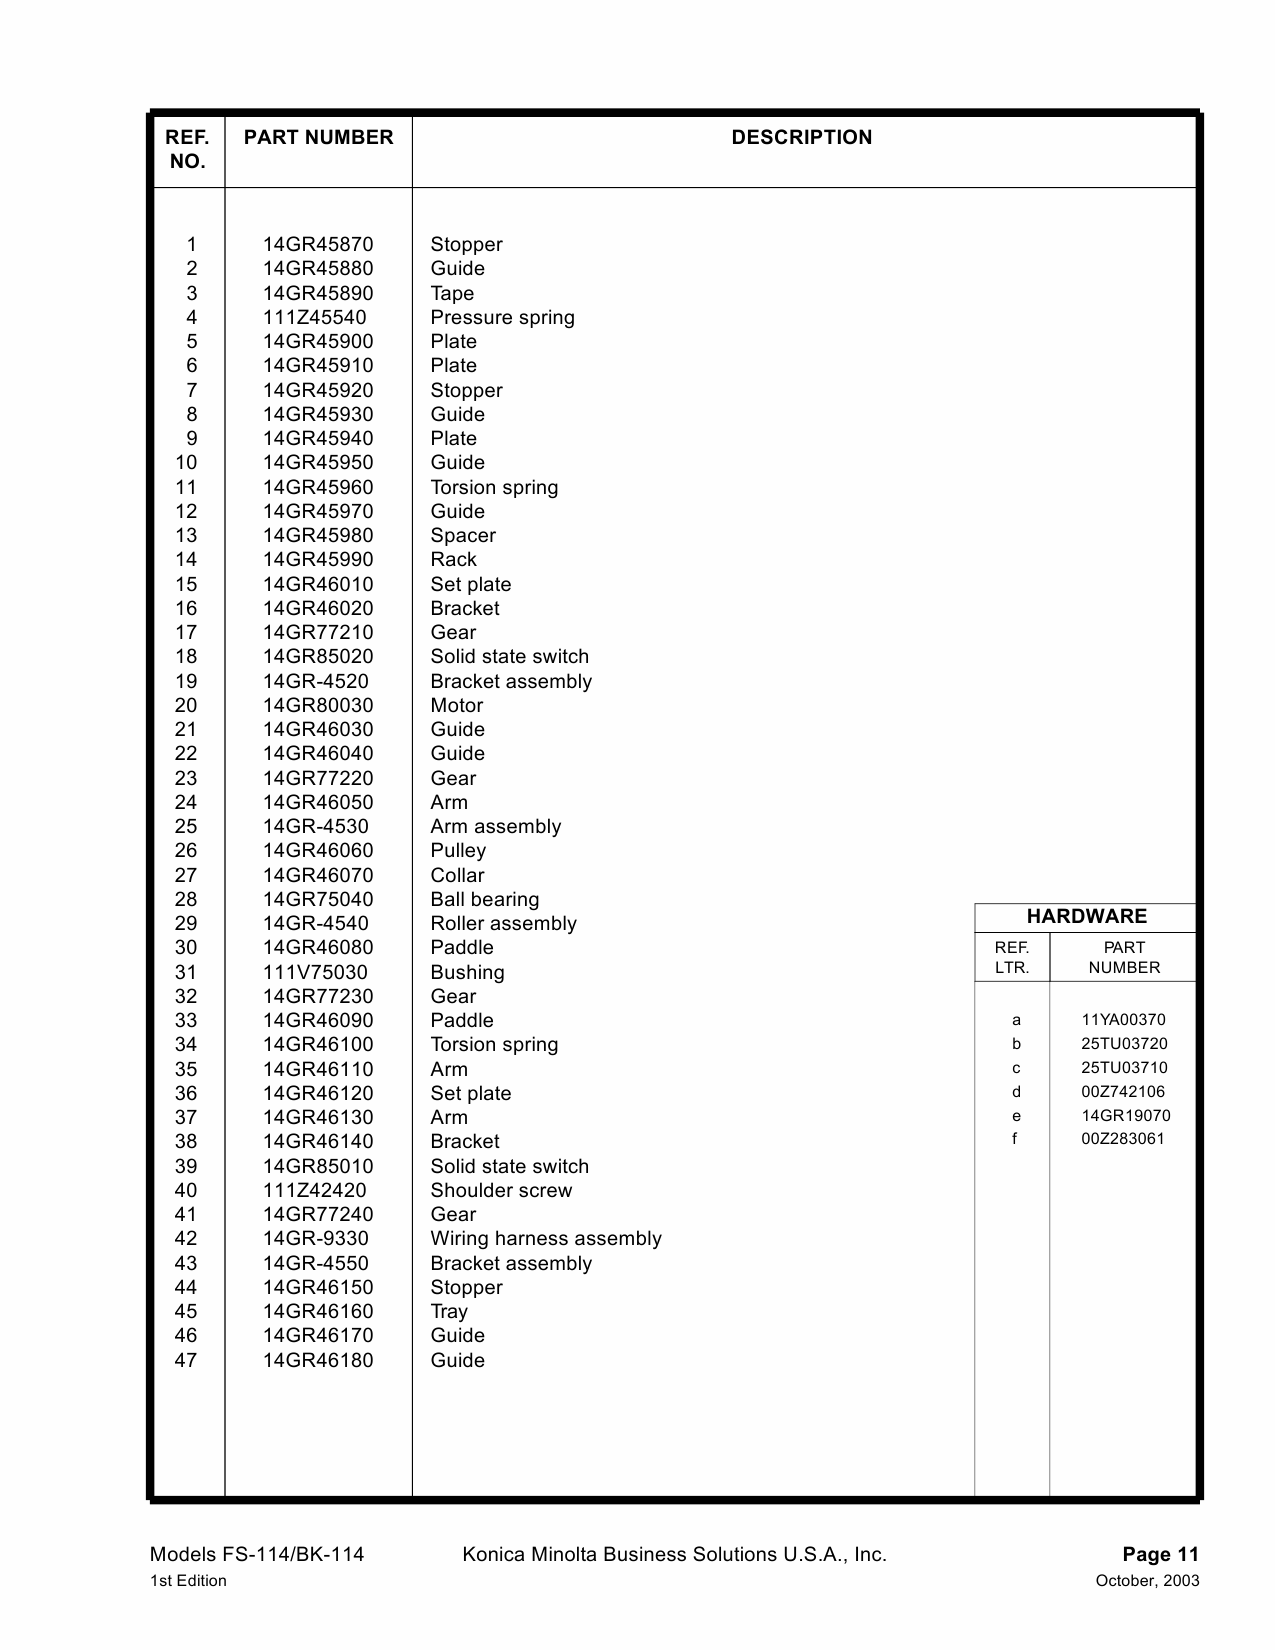 Konica-Minolta Options FS-114 BK-114 Parts Manual-5